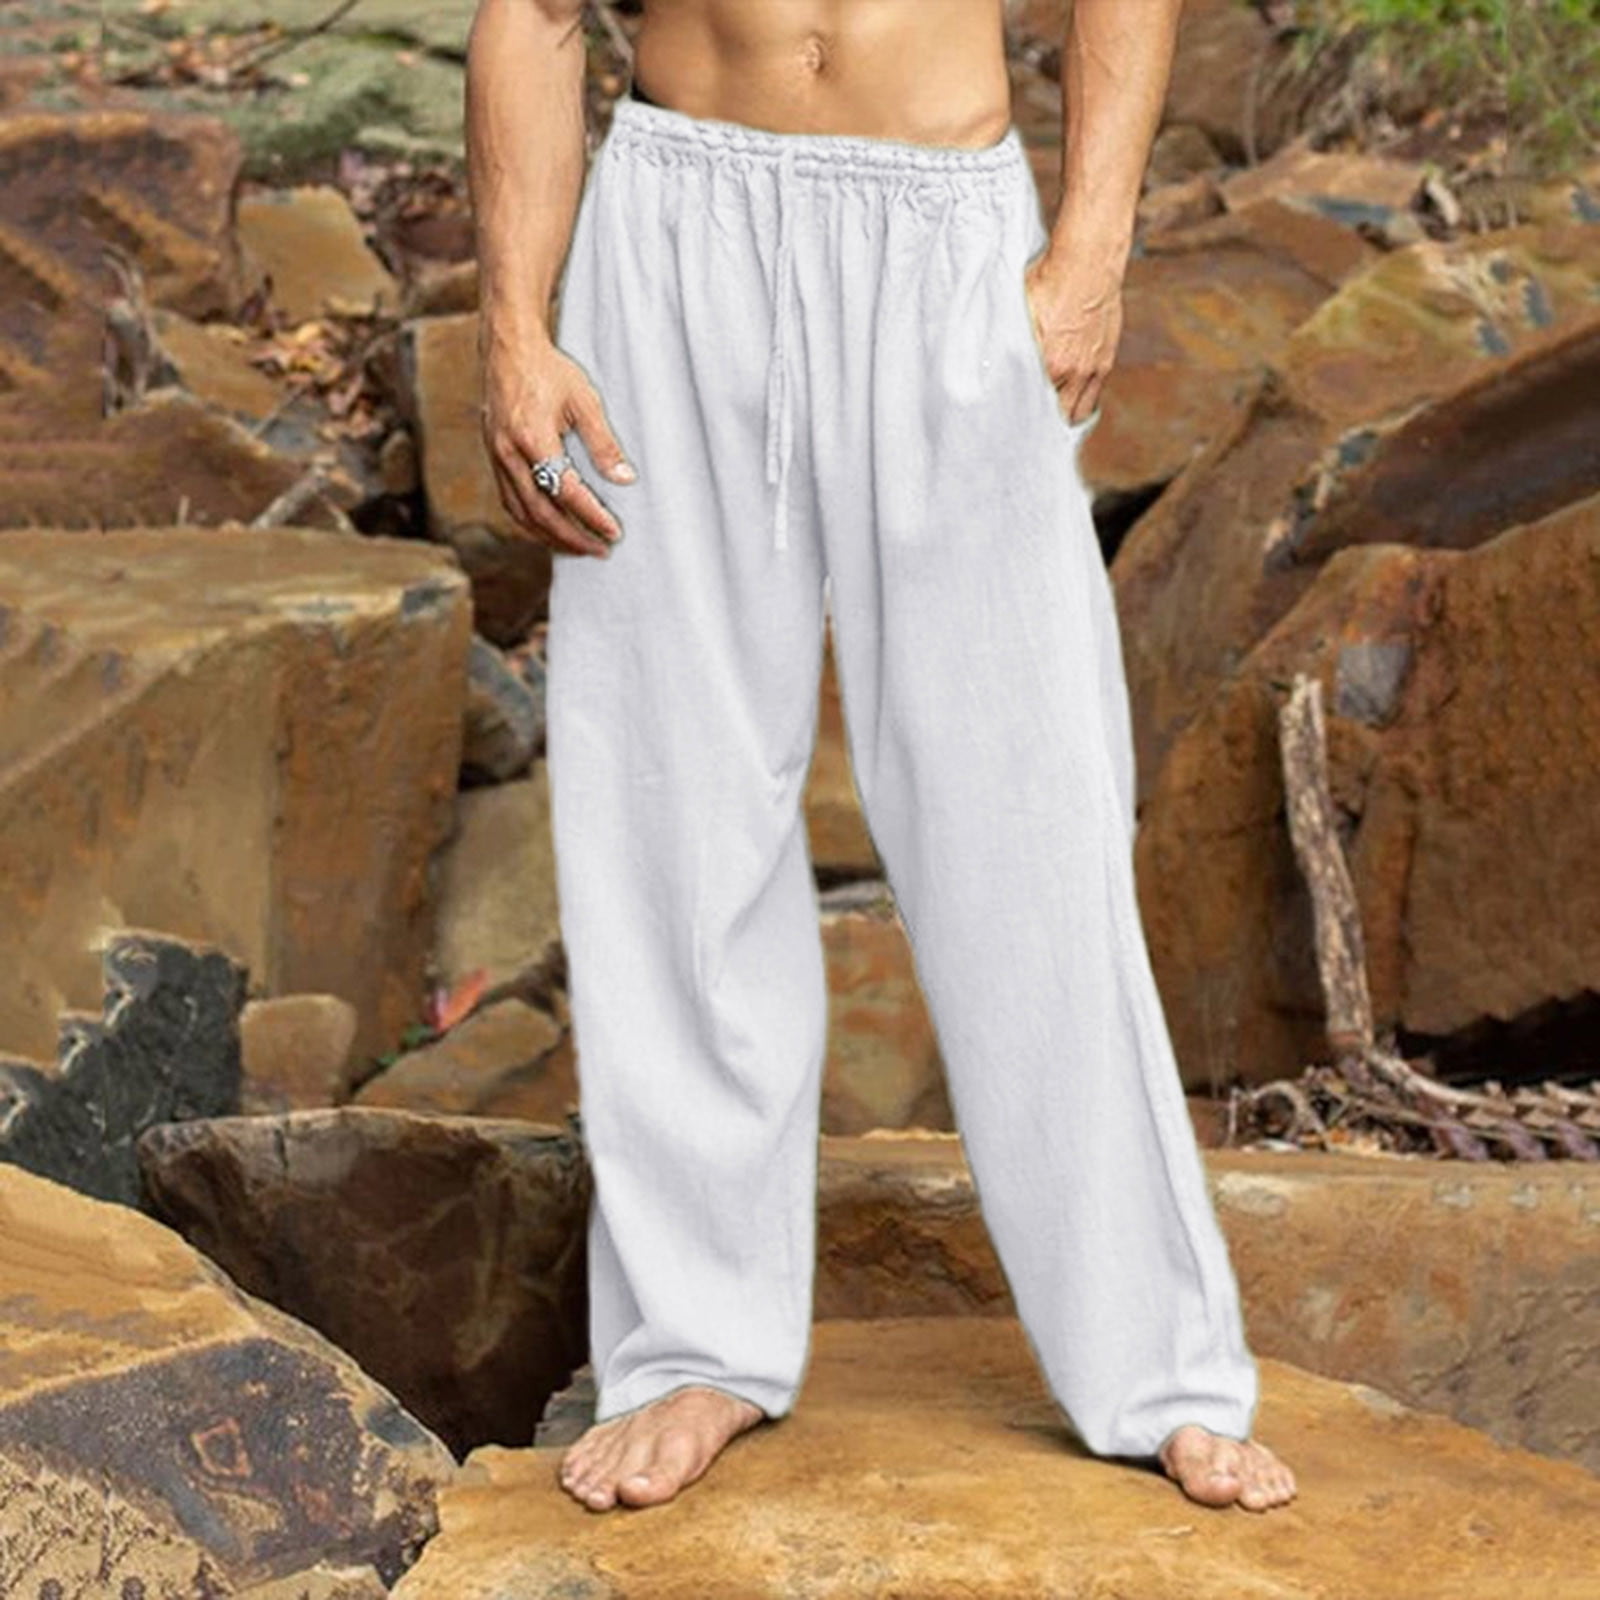 Bohio Men's Casual Summer 100% Linen Drawstring Pants with Pockets in (6)  Colors - MLP19 | Mens linen pants, Casual linen pants, Linen shirt men